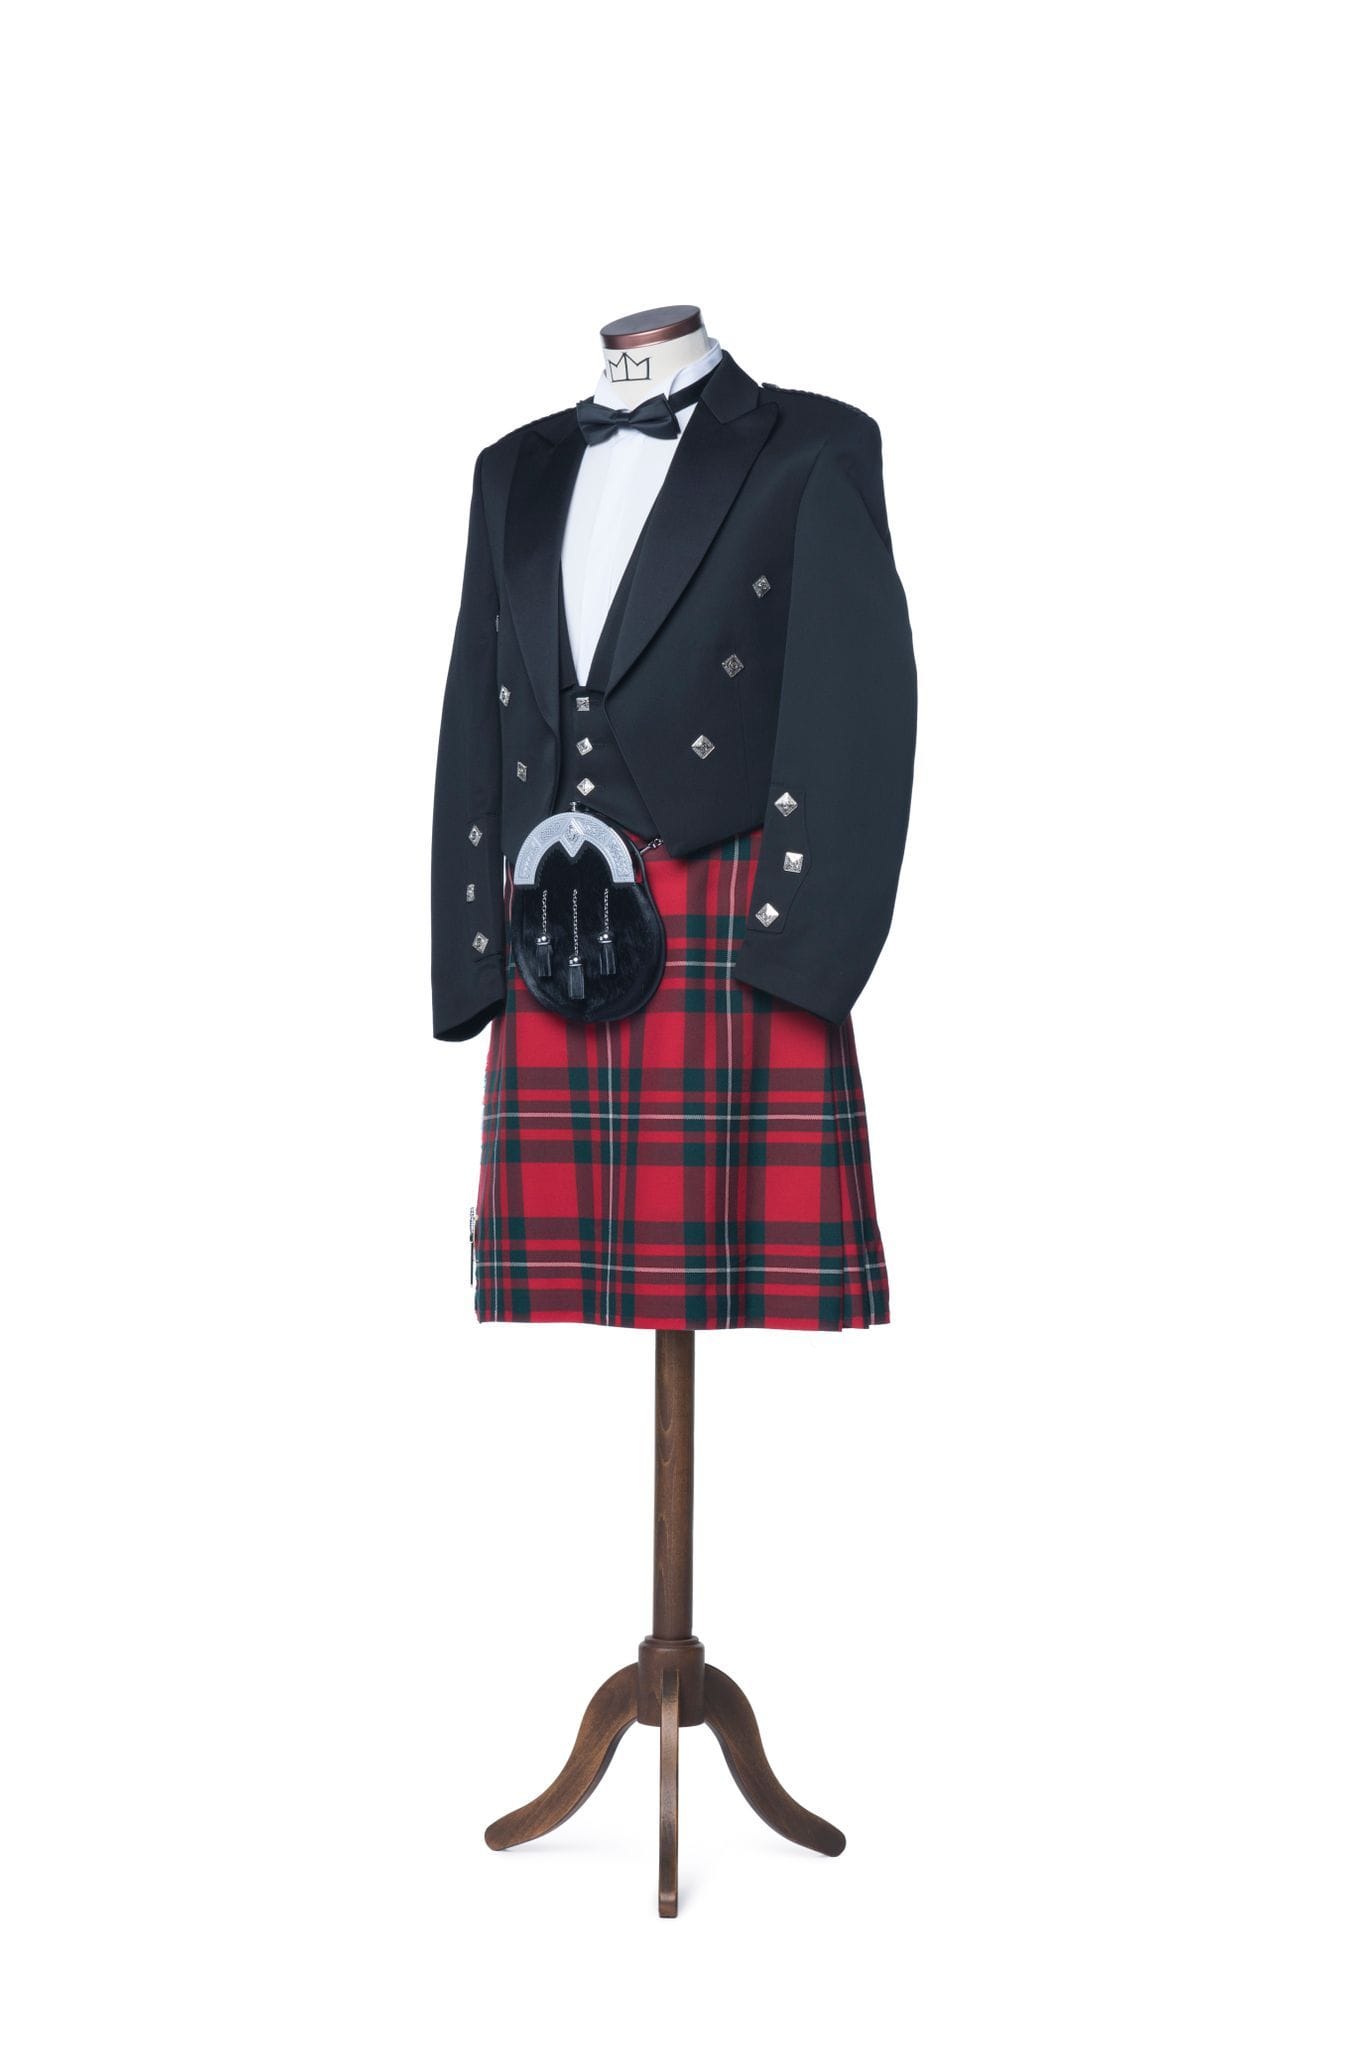 Starter Prince Charlie Kilt Outfit - MacGregor and MacDuff